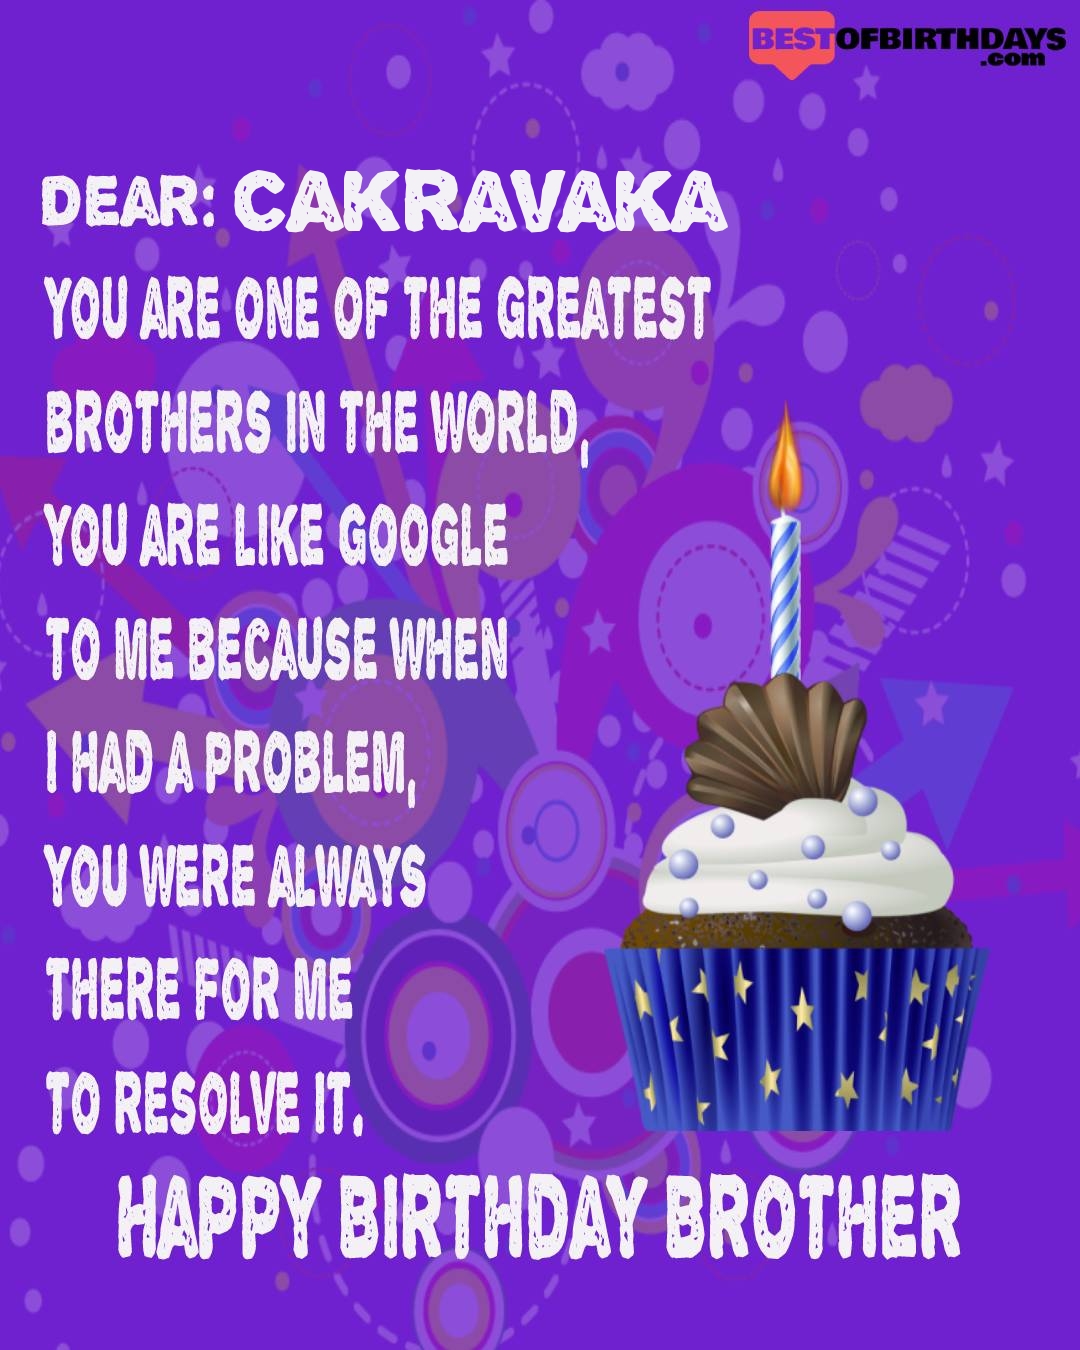 Happy birthday cakravaka bhai brother bro